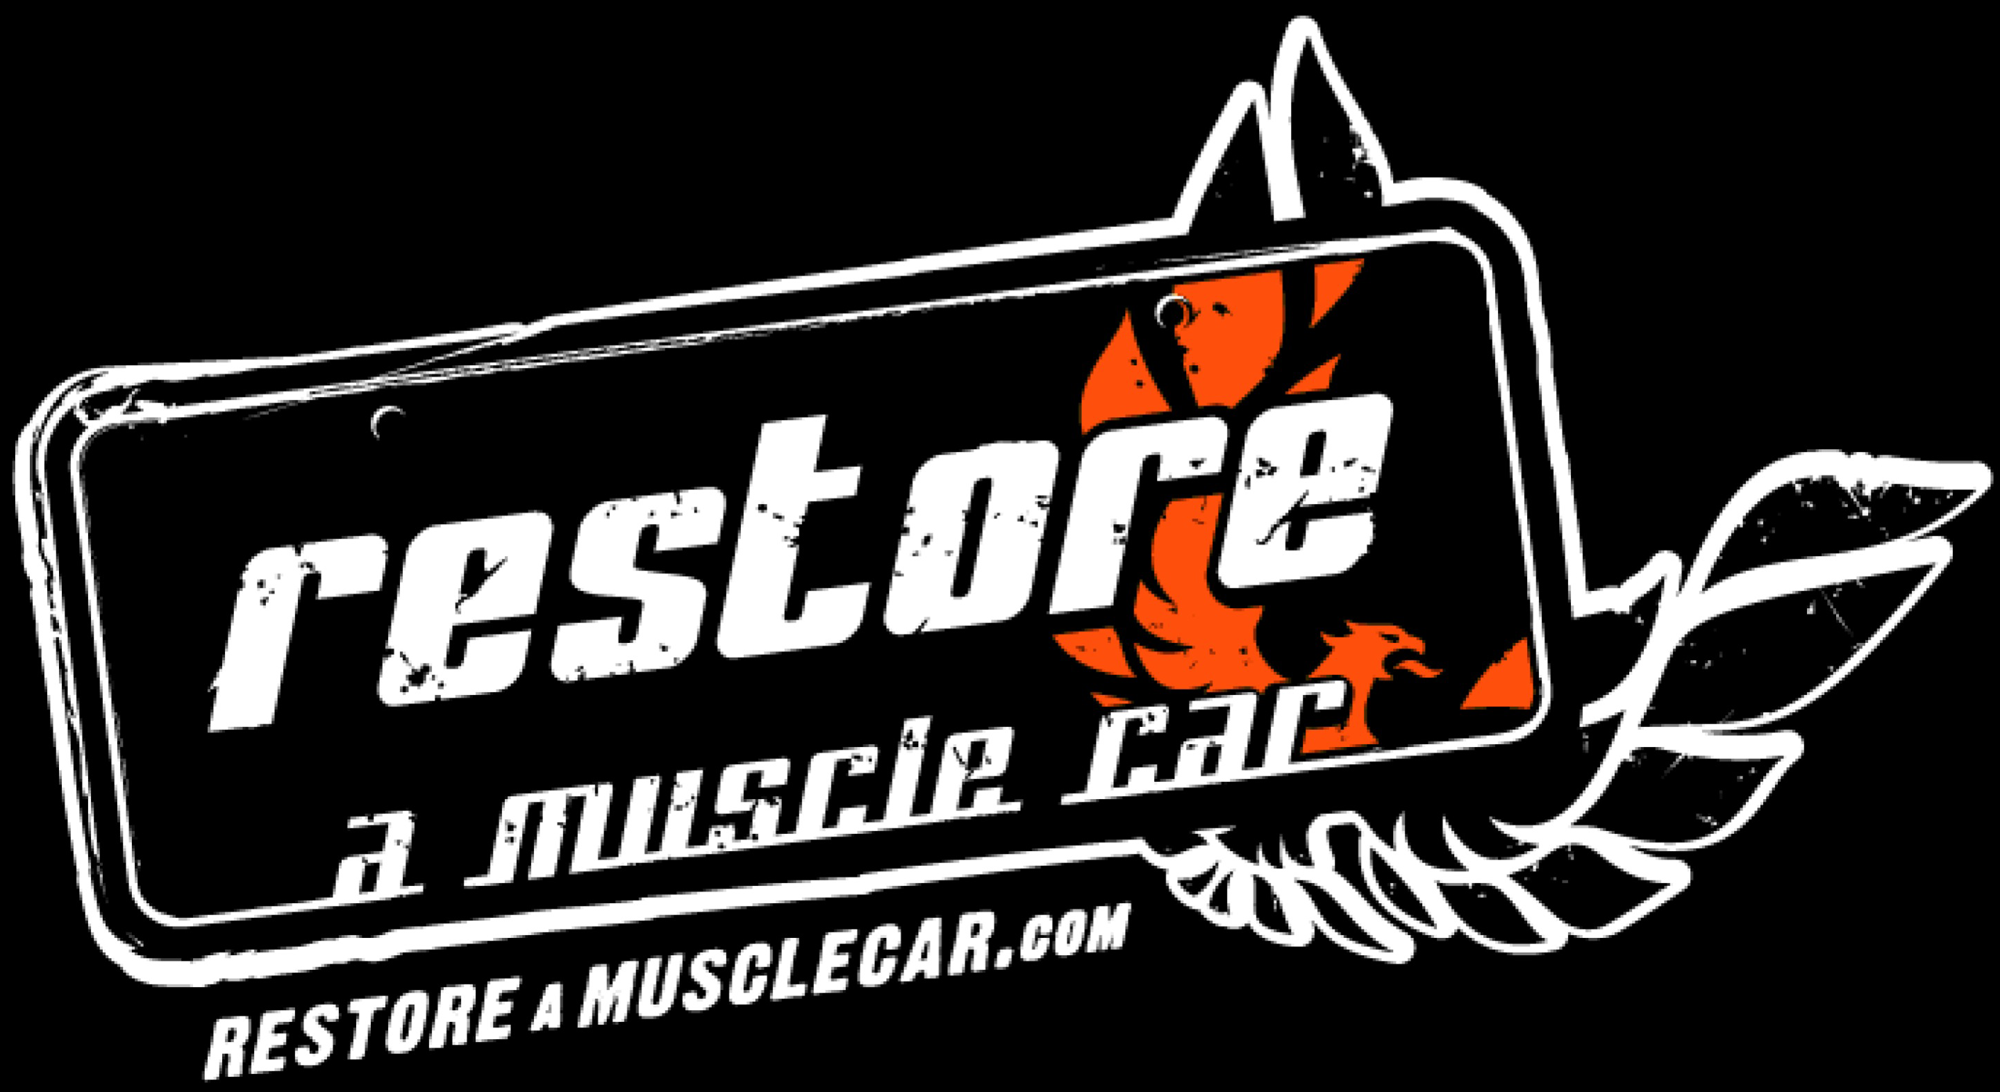 Restore a Muscle Car